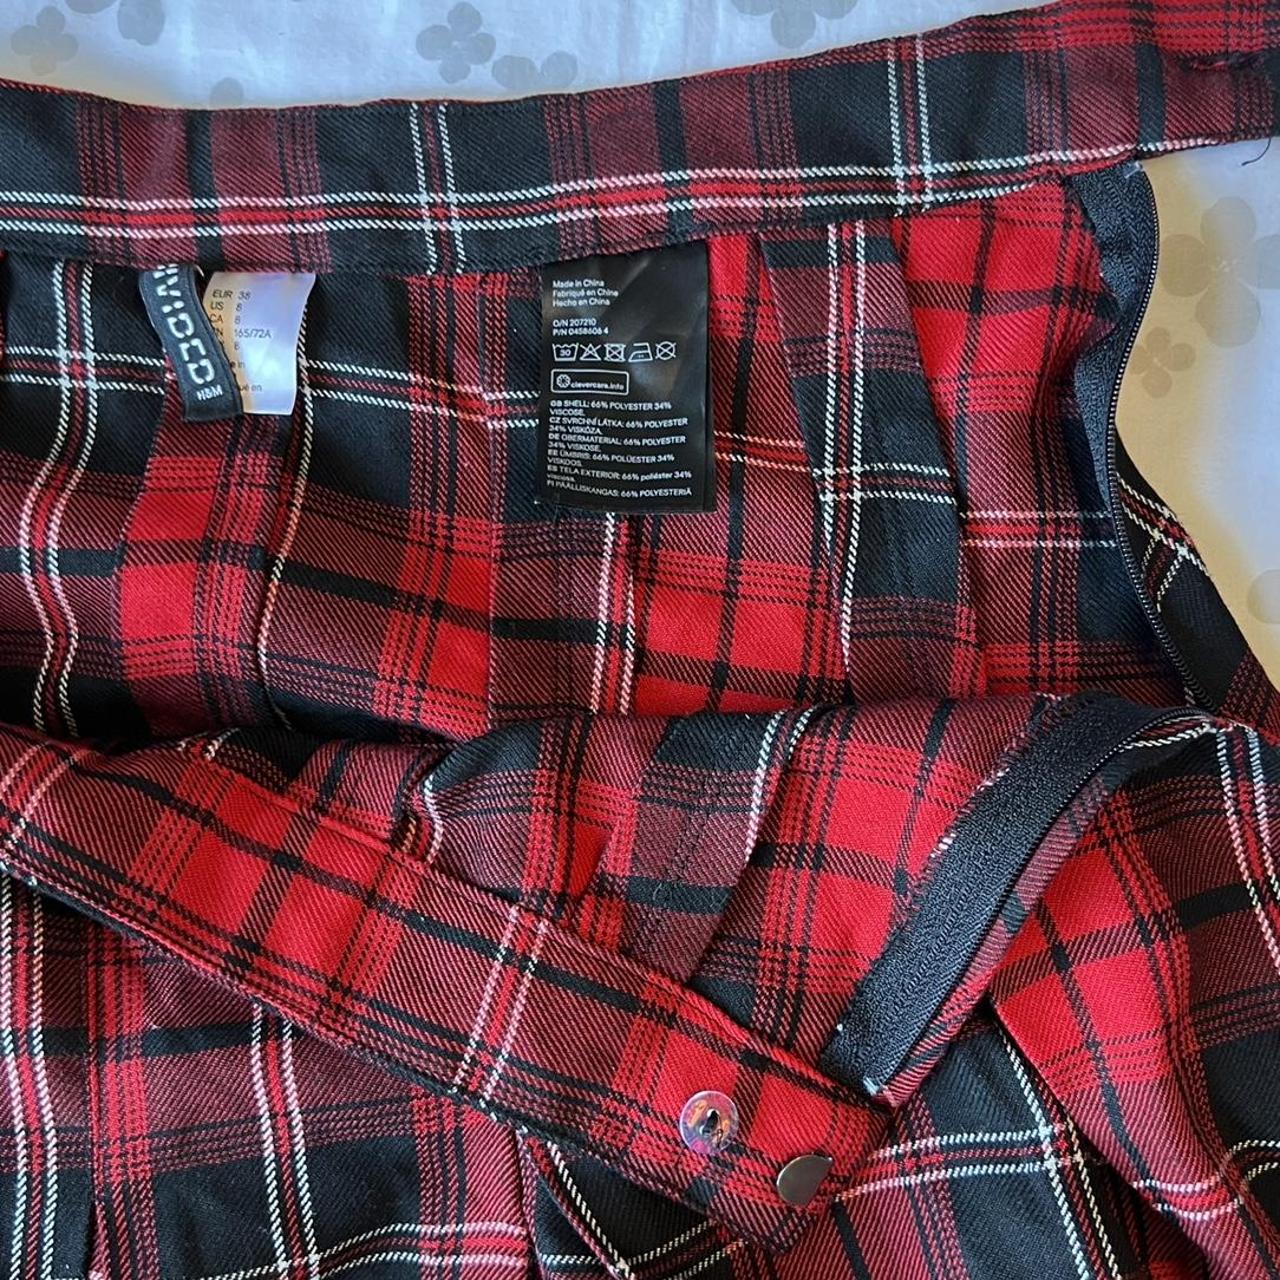 H & M Plaid Skirt - Red plaid school type skirt -... - Depop